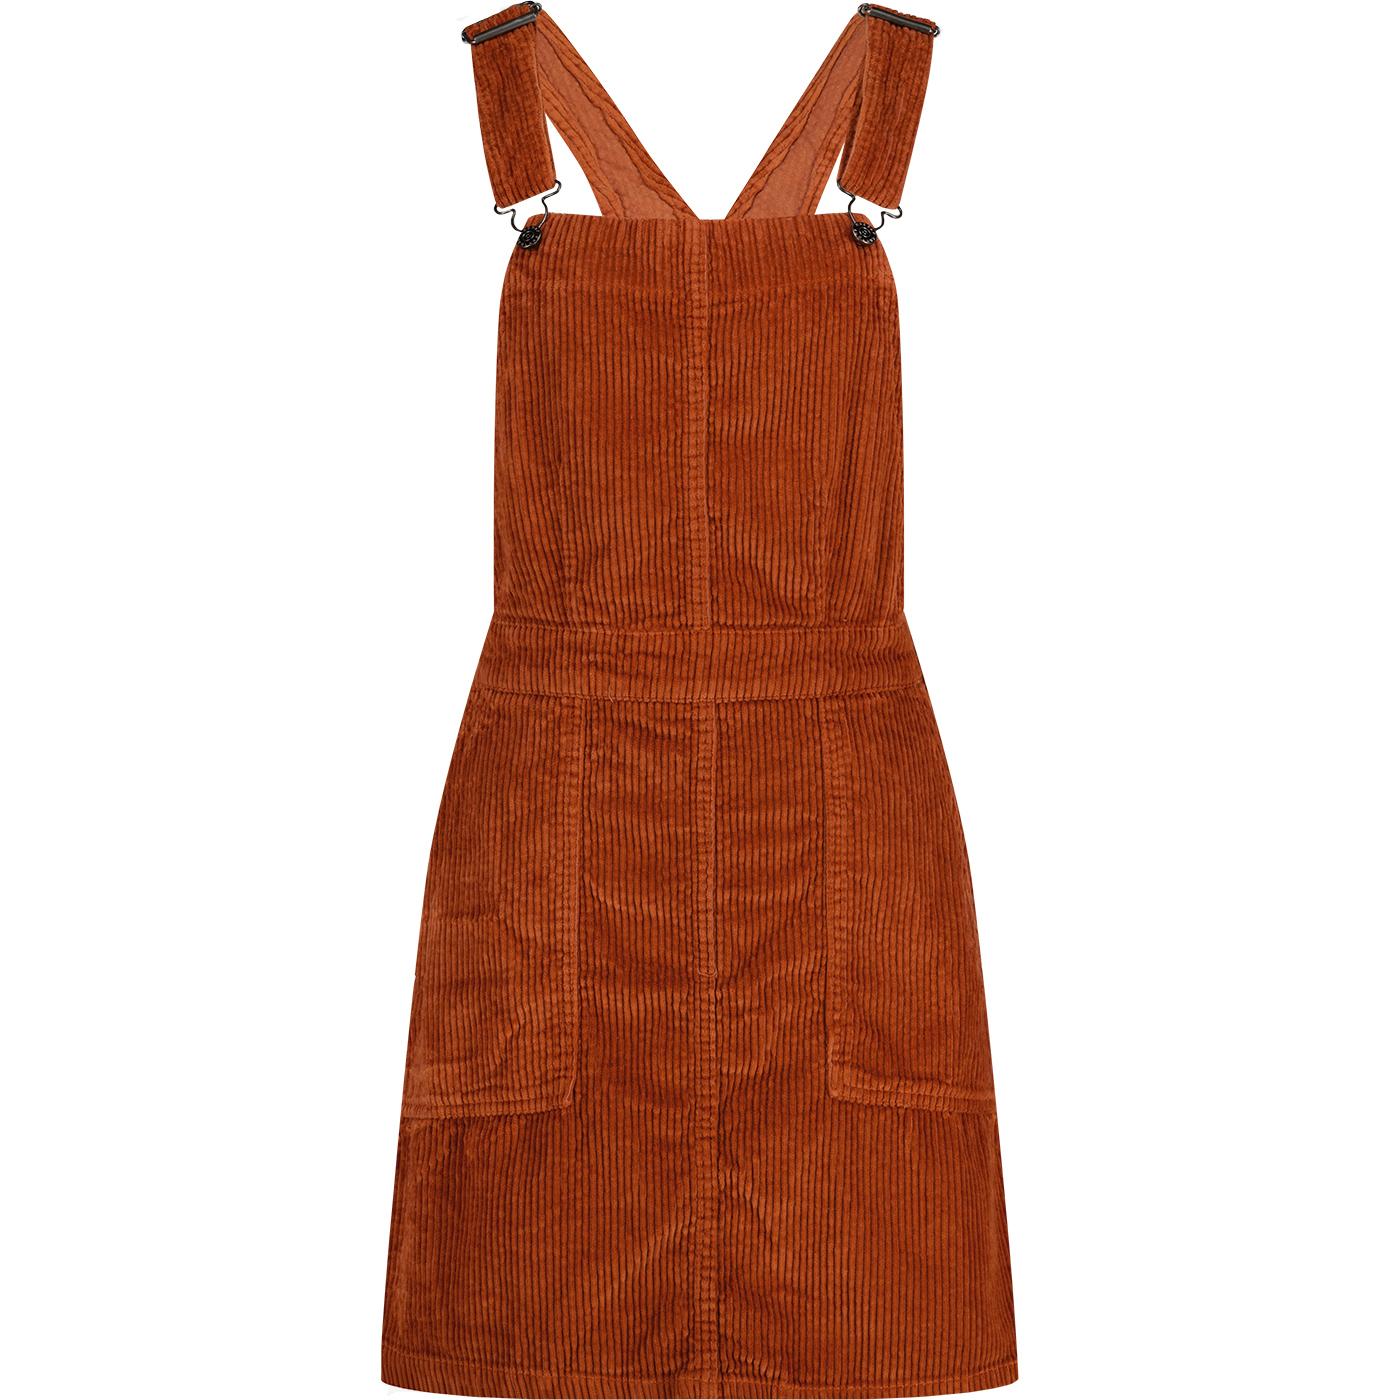 Marlo MADCAP ENGLAND 1960s Cord Pinafore Dress (G)